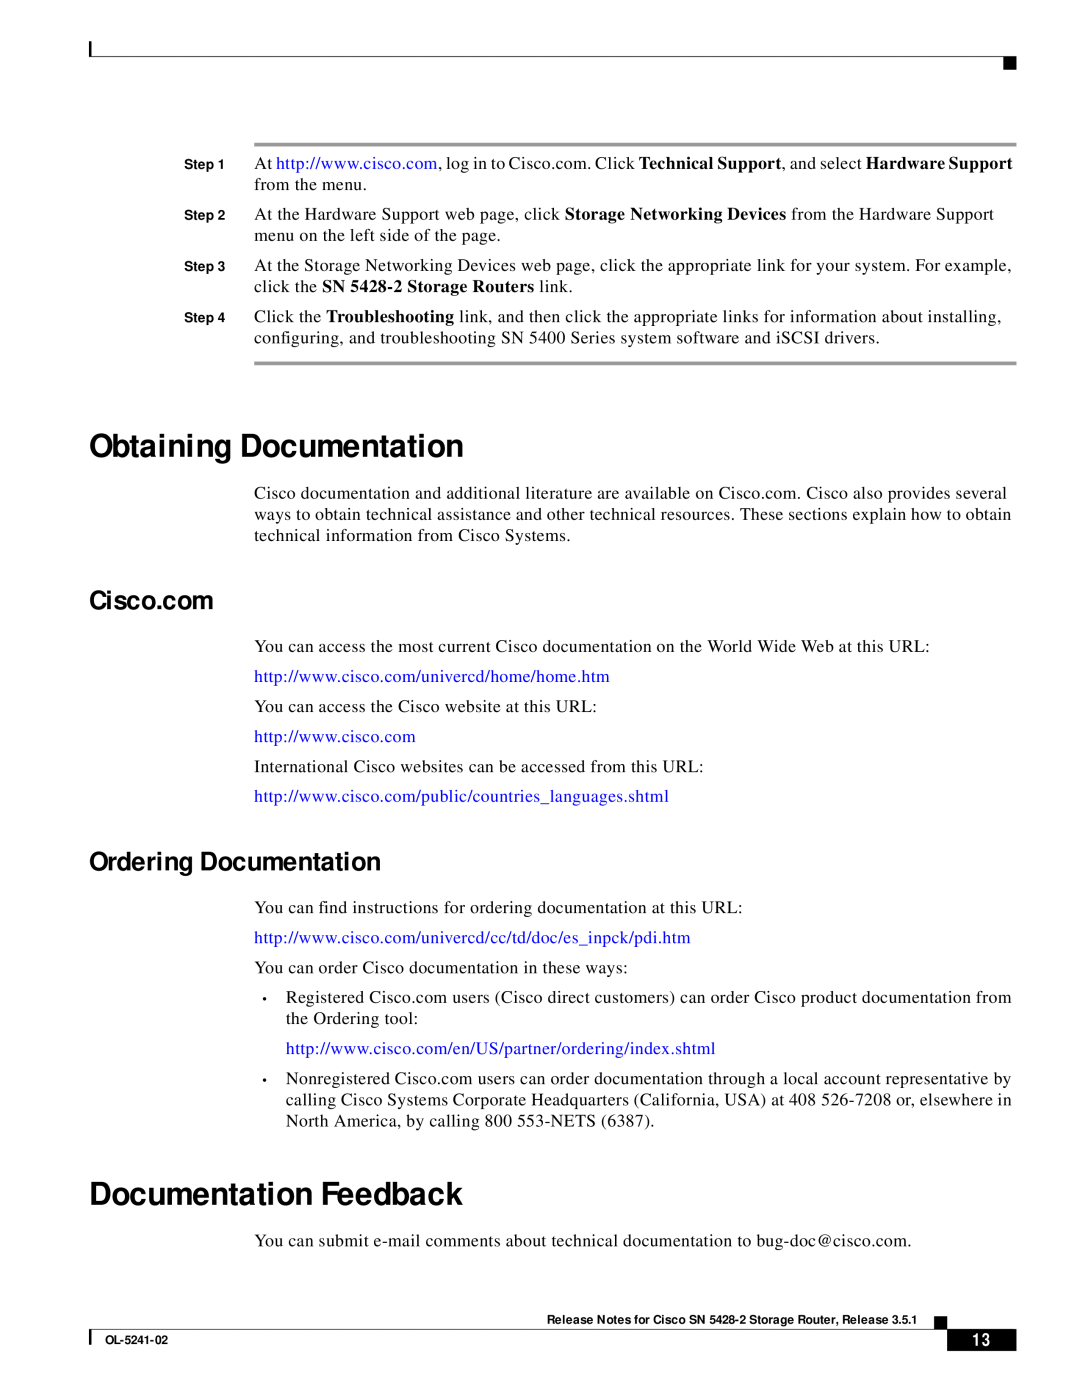 Cisco Systems SN 5428-2 manual Obtaining Documentation, Documentation Feedback, Cisco.com, Ordering Documentation 